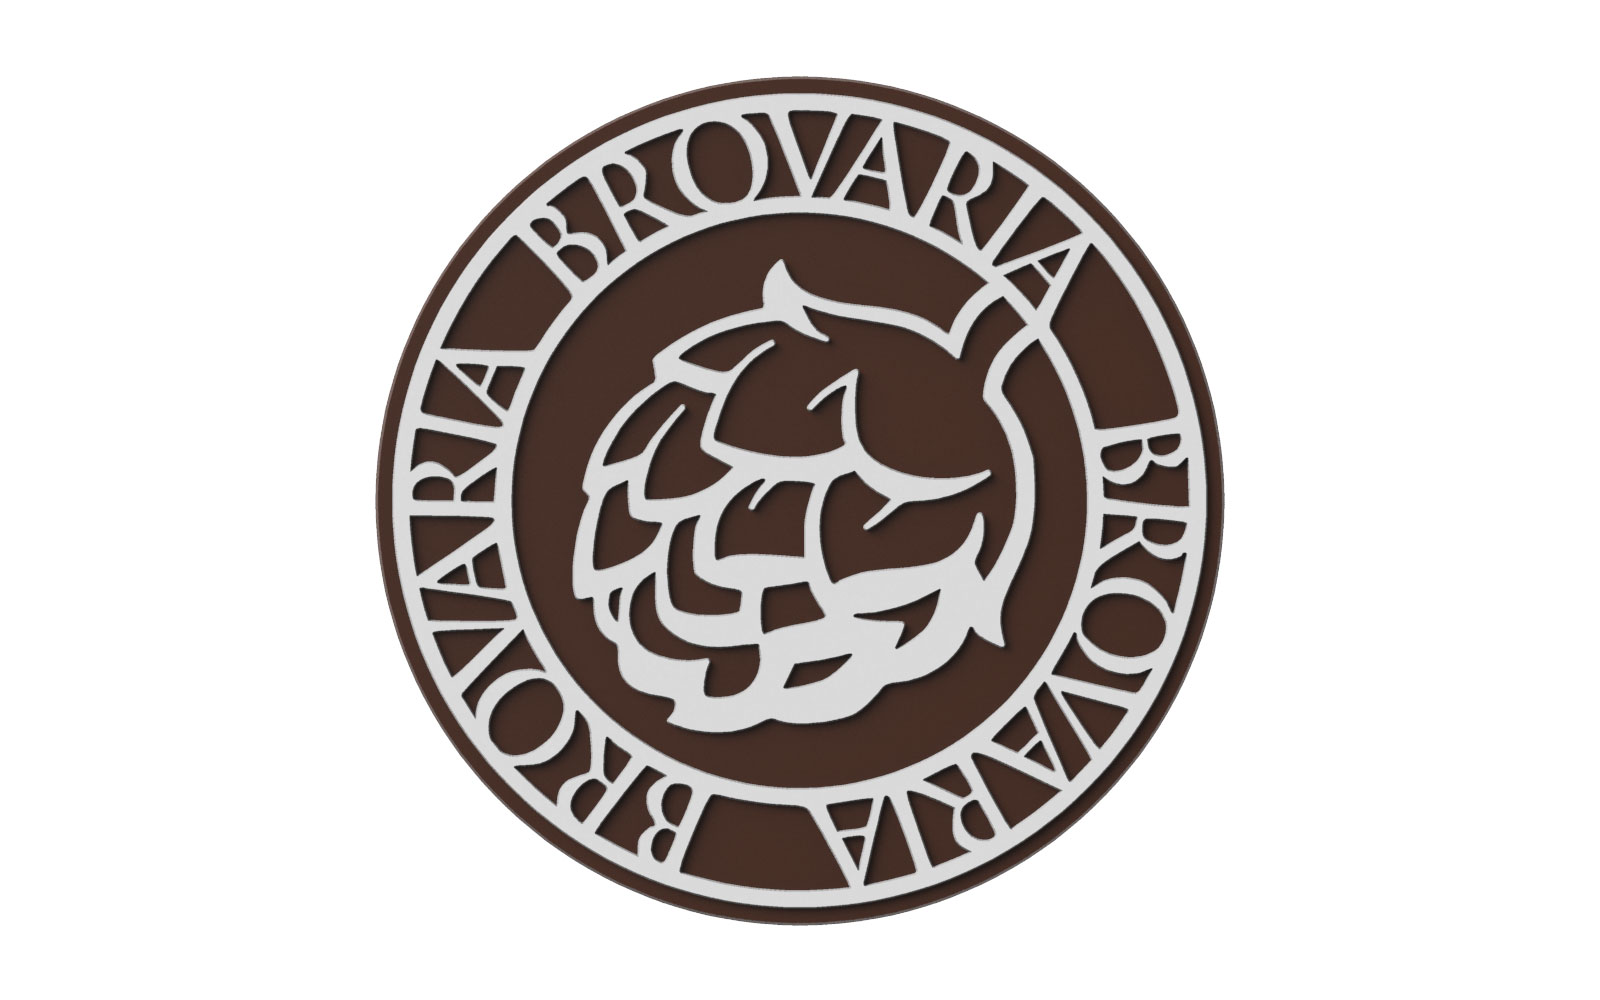 Logo of Brovaria brewery